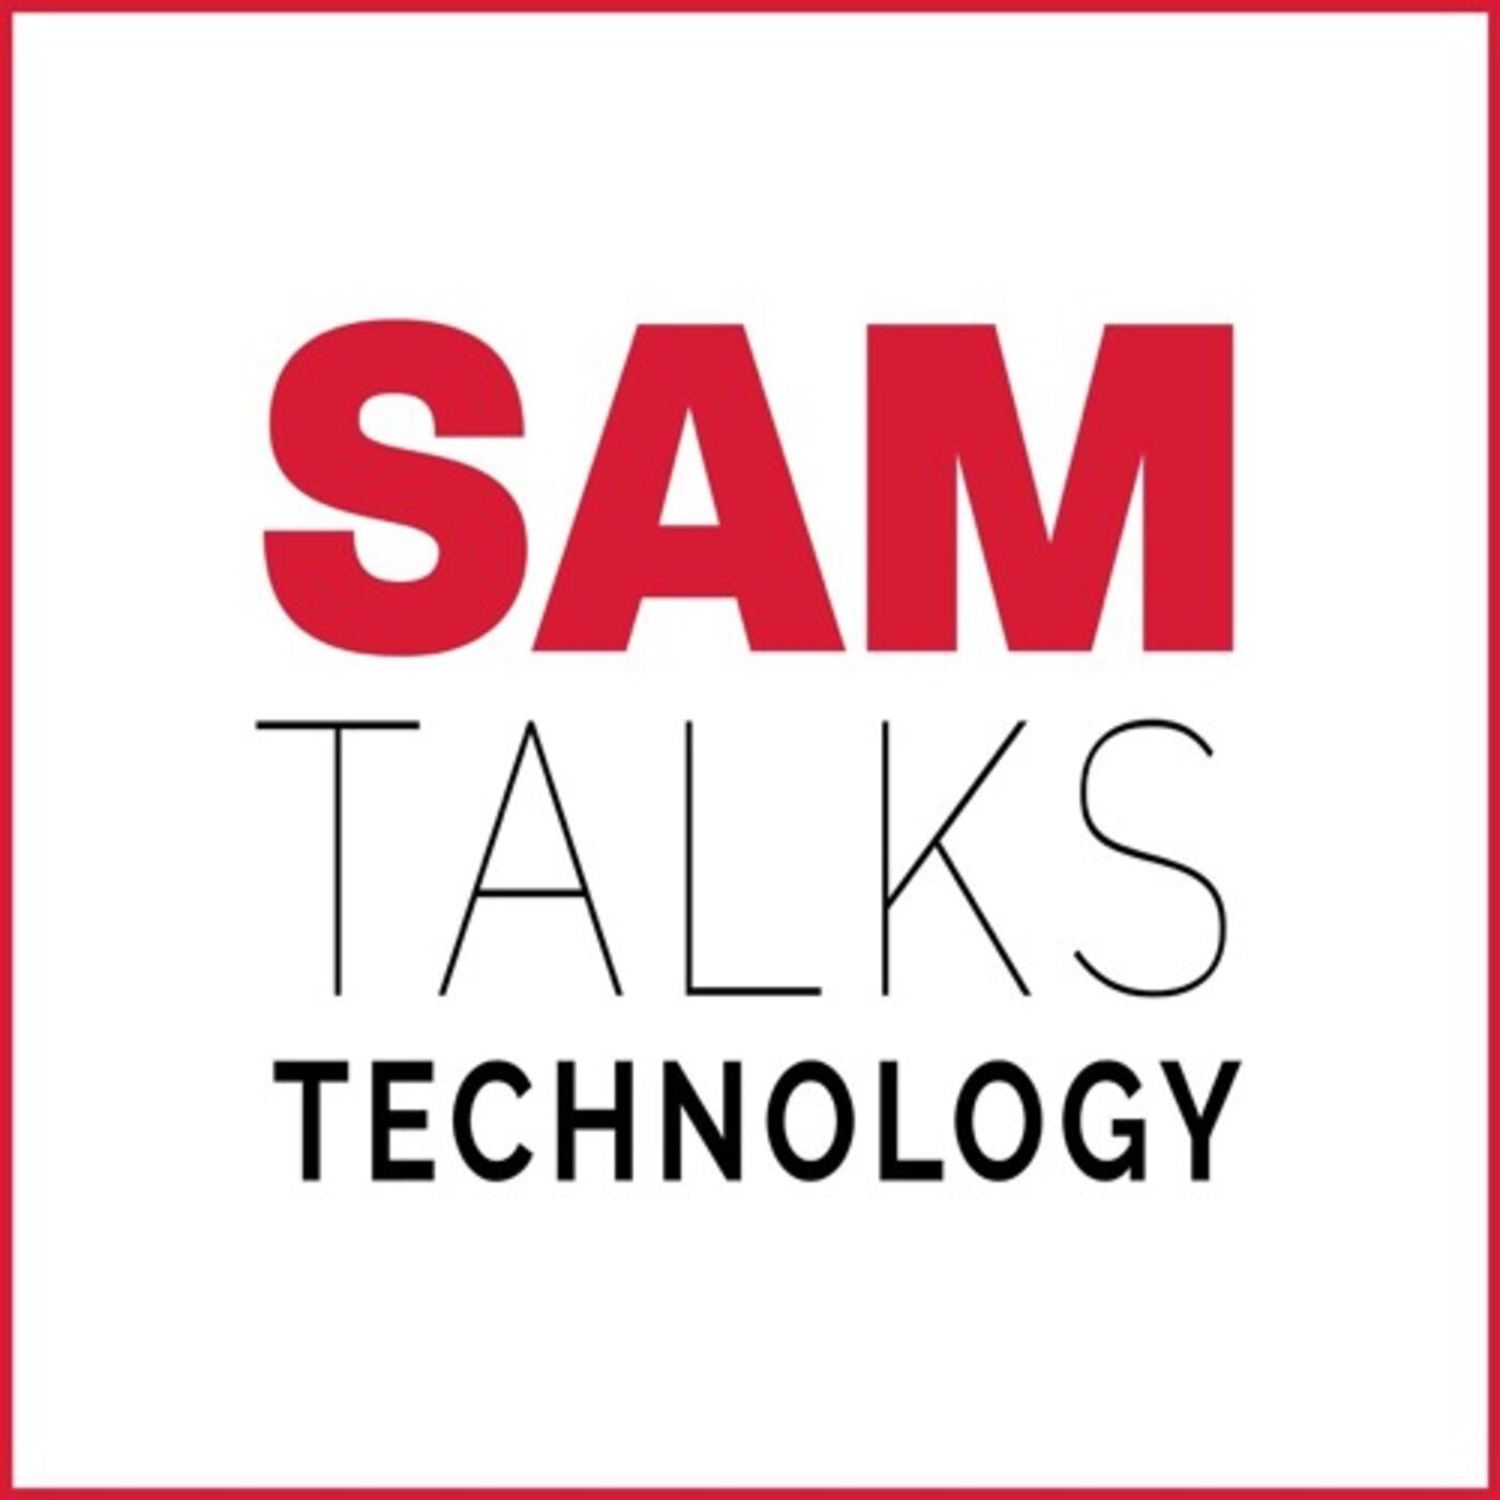 Probably no more Sam Talks Technology